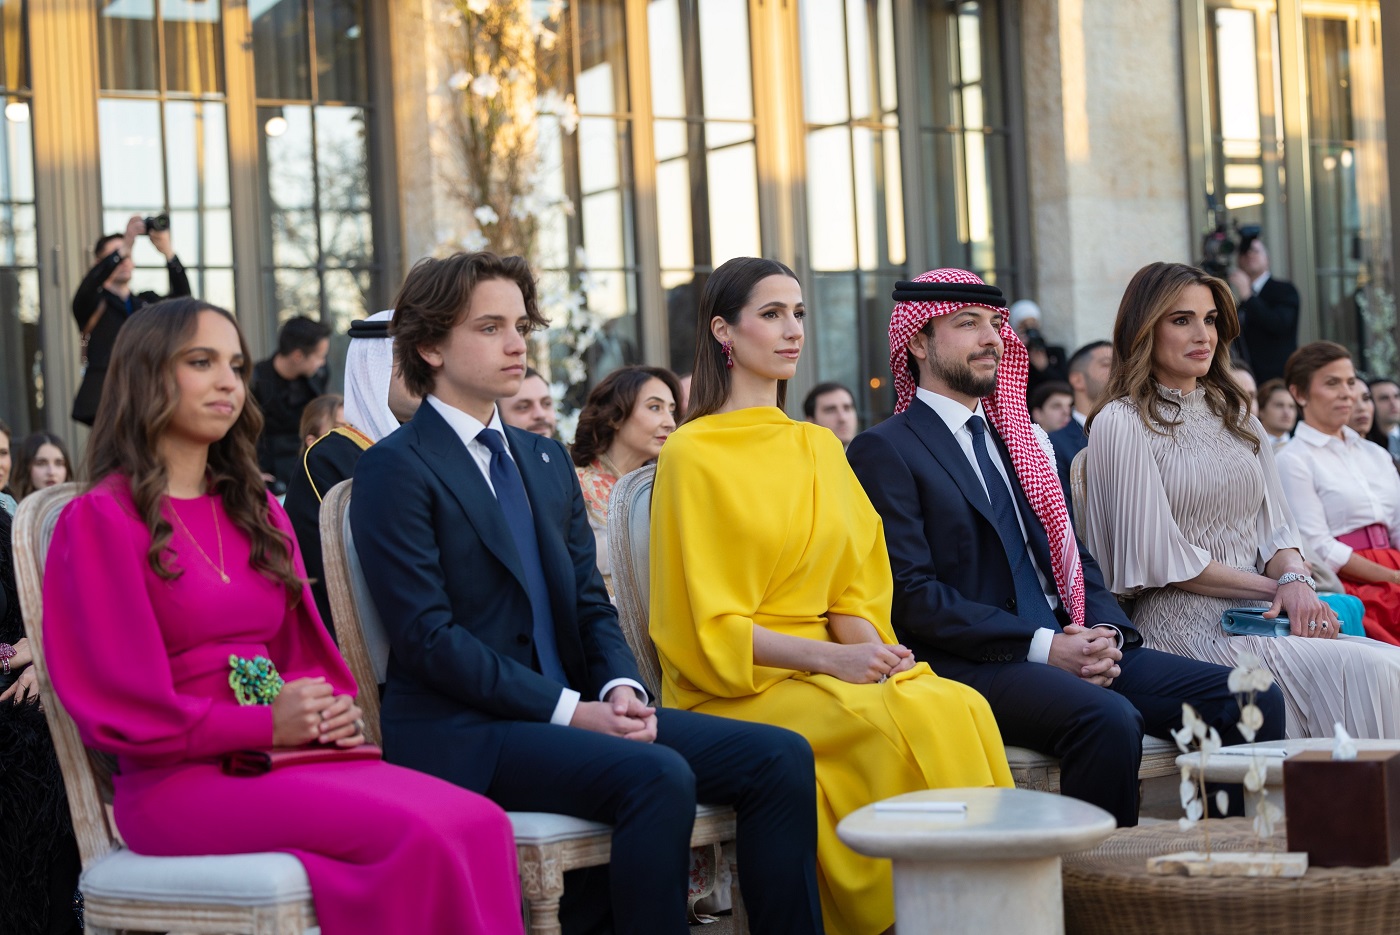 Rajwa Khaled in Vibrant Yellow for Princess Iman's Wedding